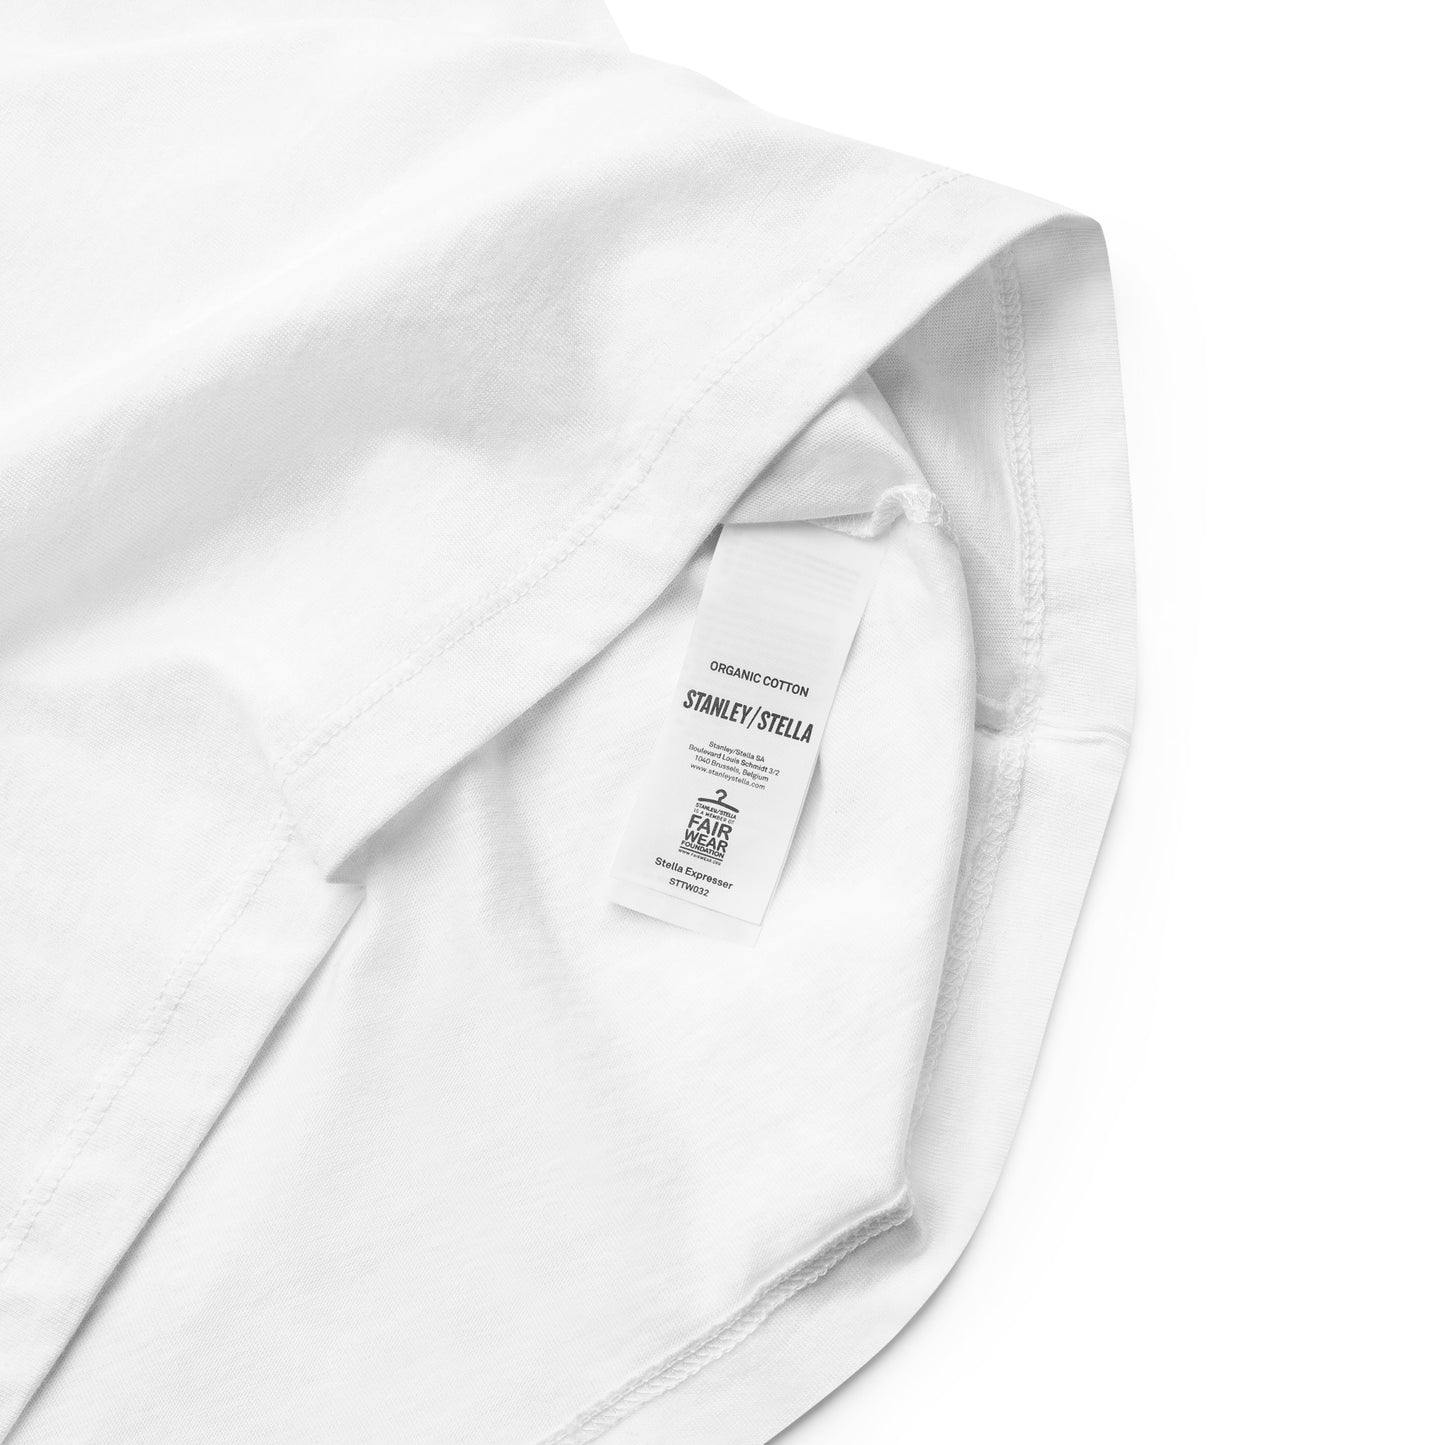 T-shirt blanc oiseaux printaniers brodés style Bauhaus en coton bio - Femme blanc